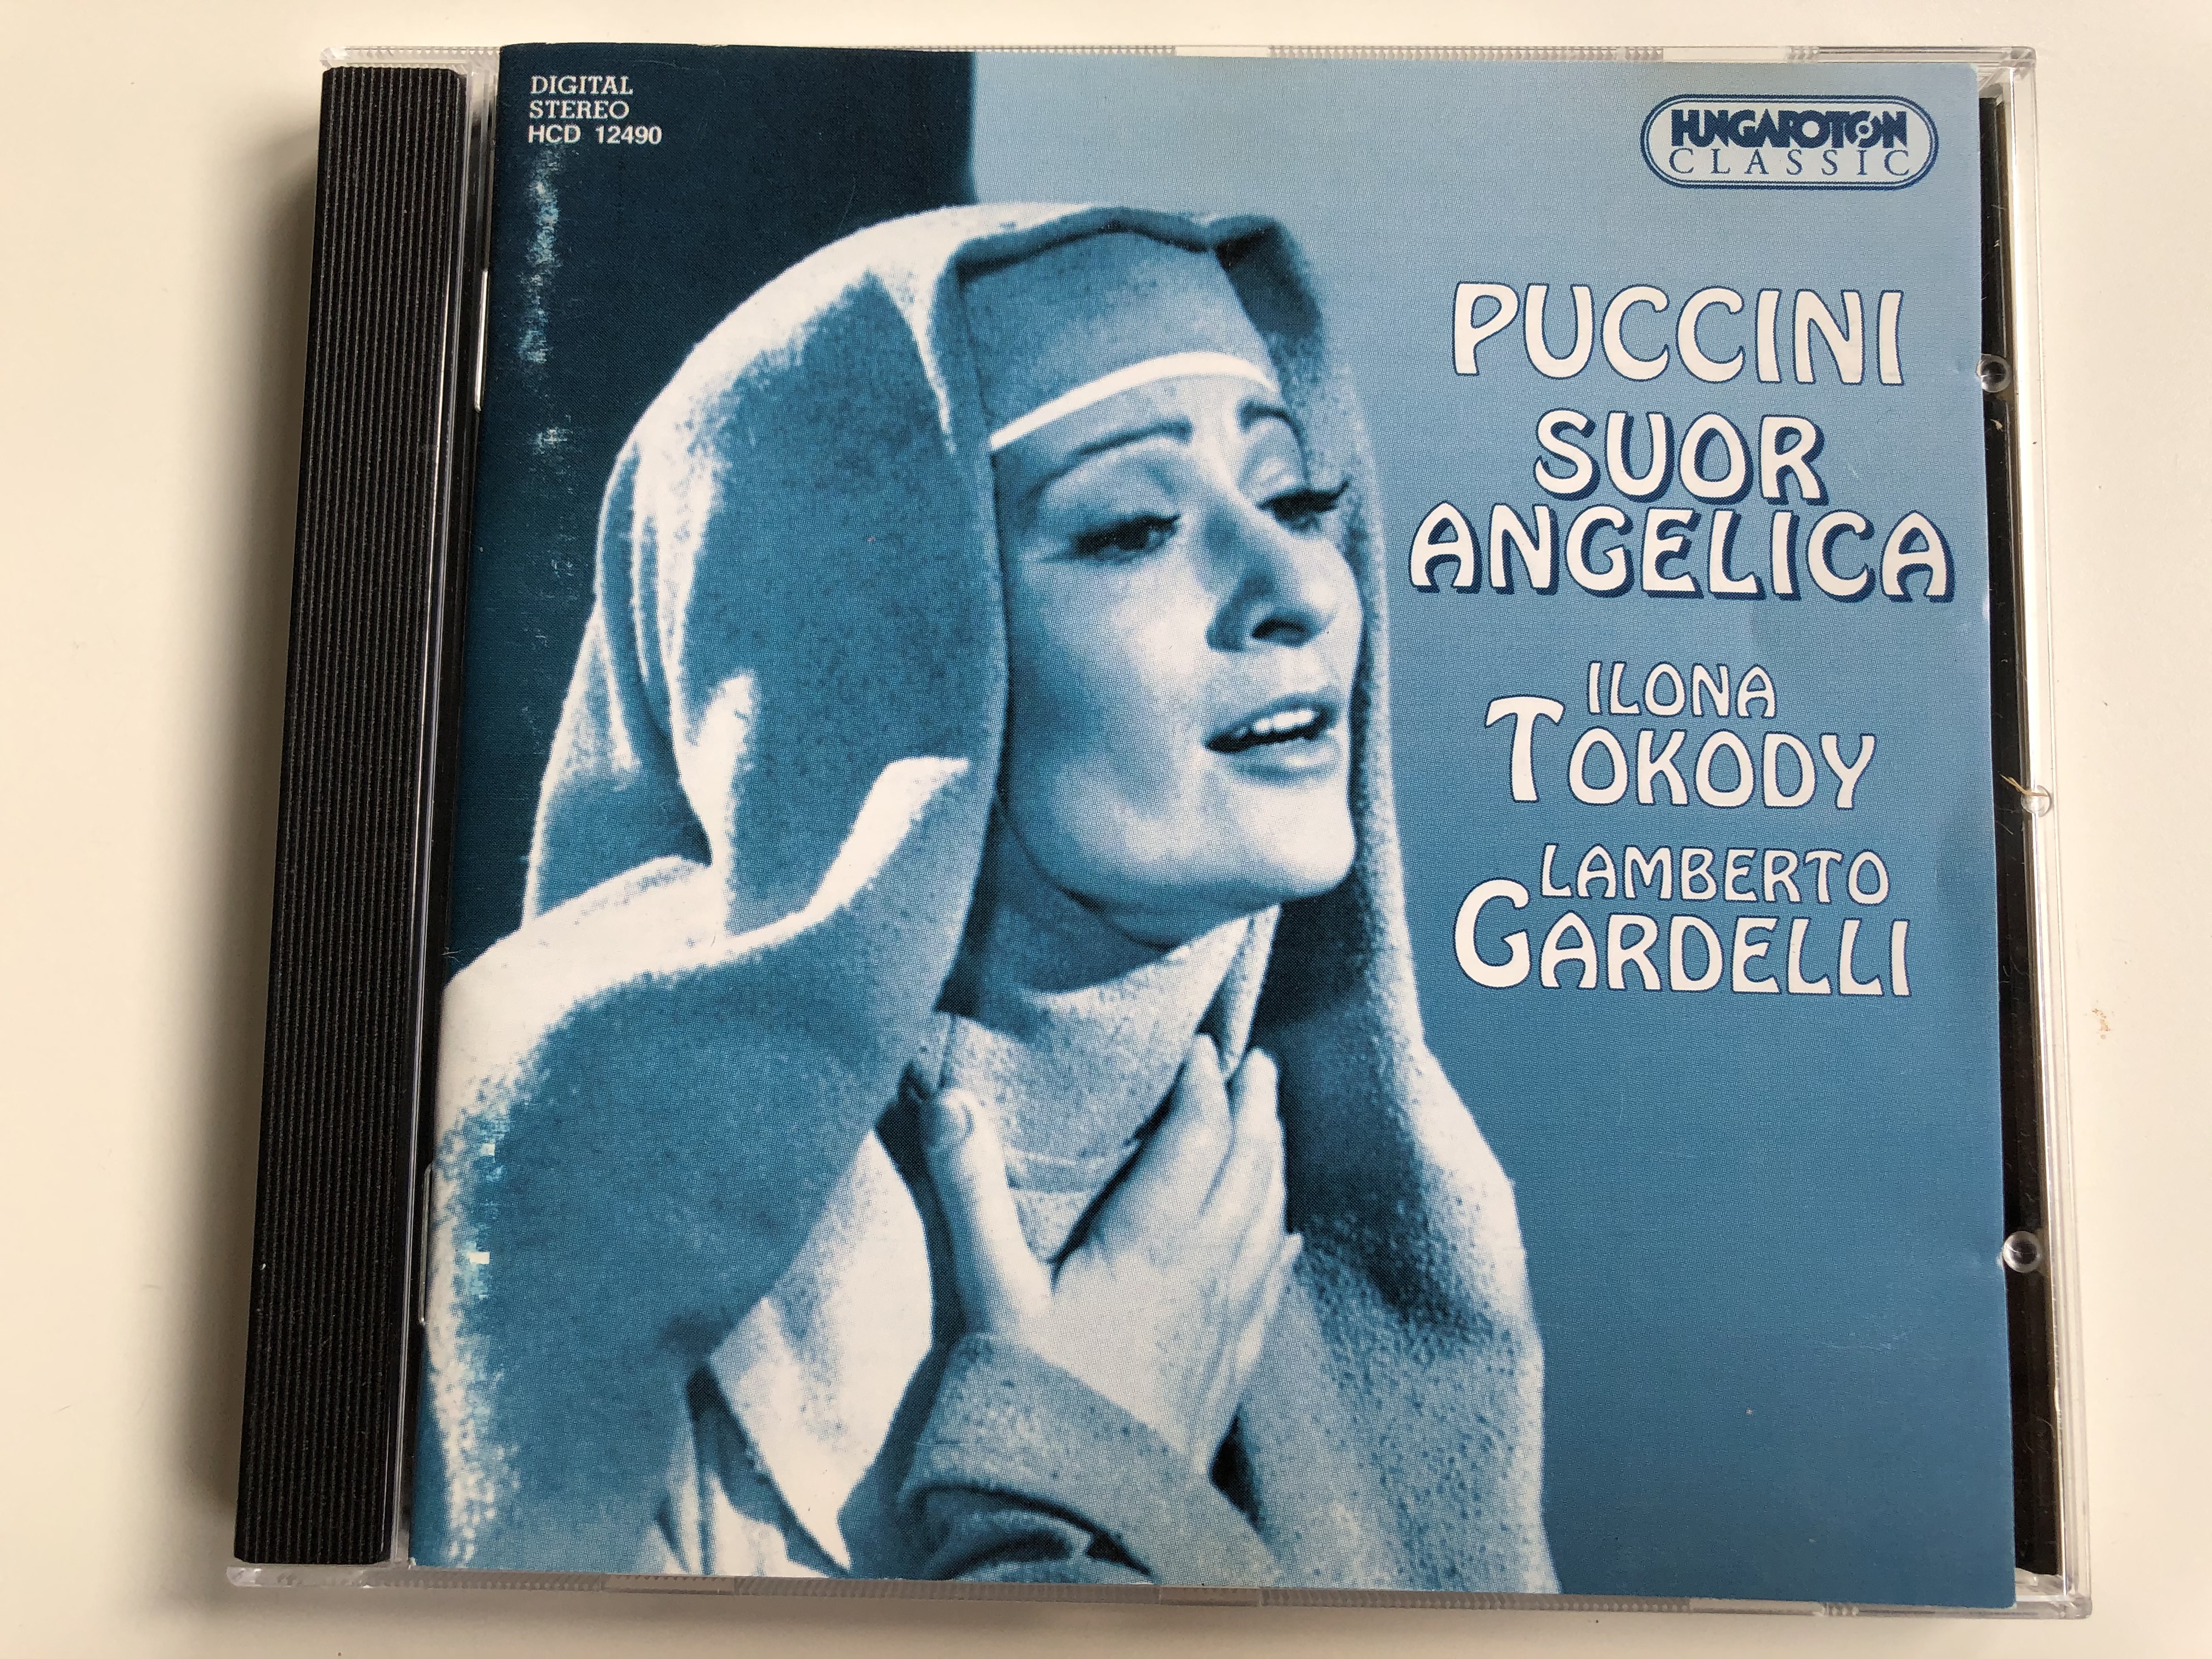 puccini-suor-angelica-ilona-tokody-lamberto-gardelli-hungaroton-classic-audio-cd-1996-stereo-hcd-12490-2-1-.jpg